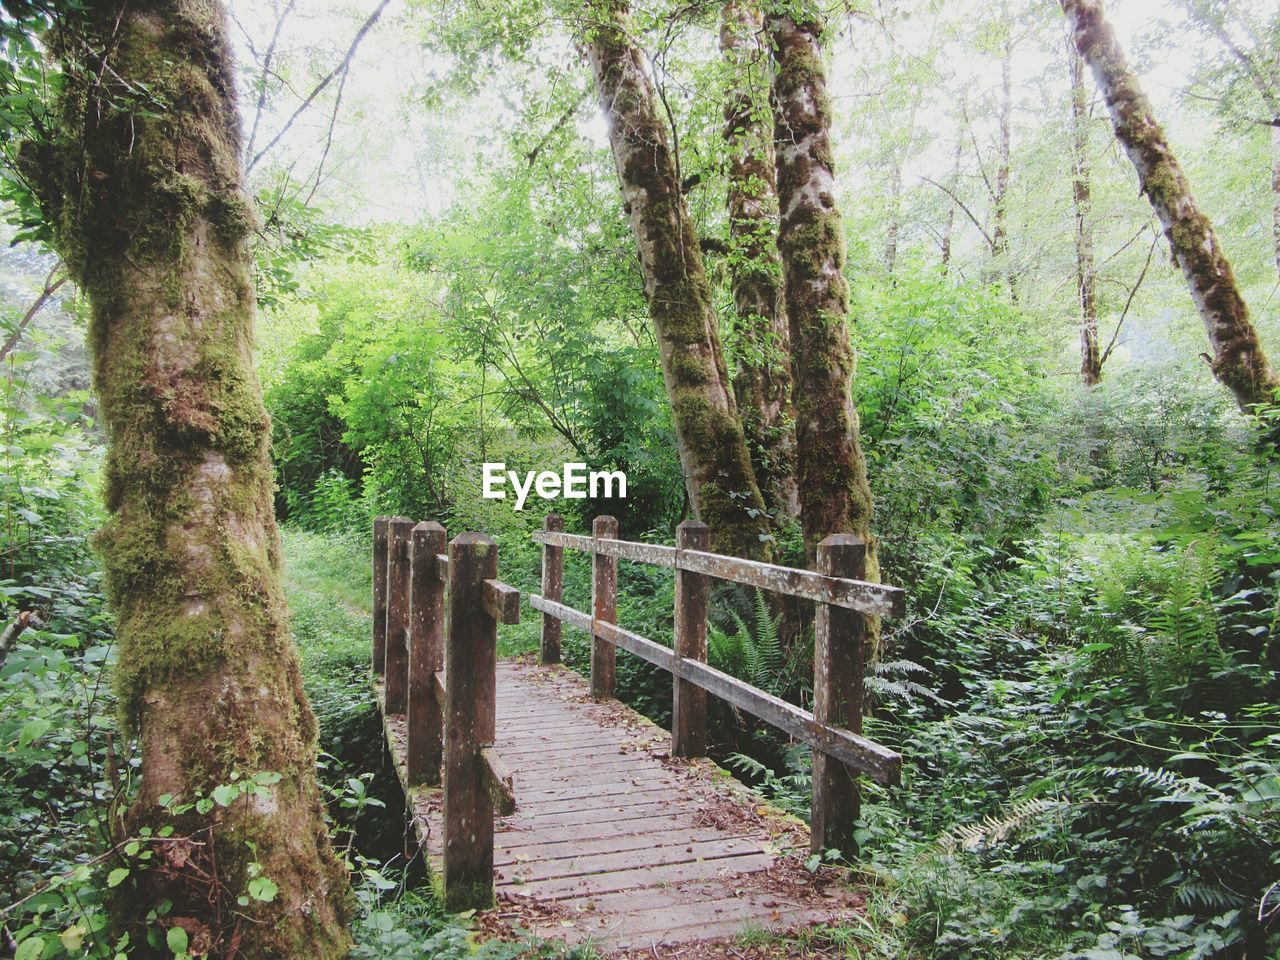 Narrow footbridge along trees